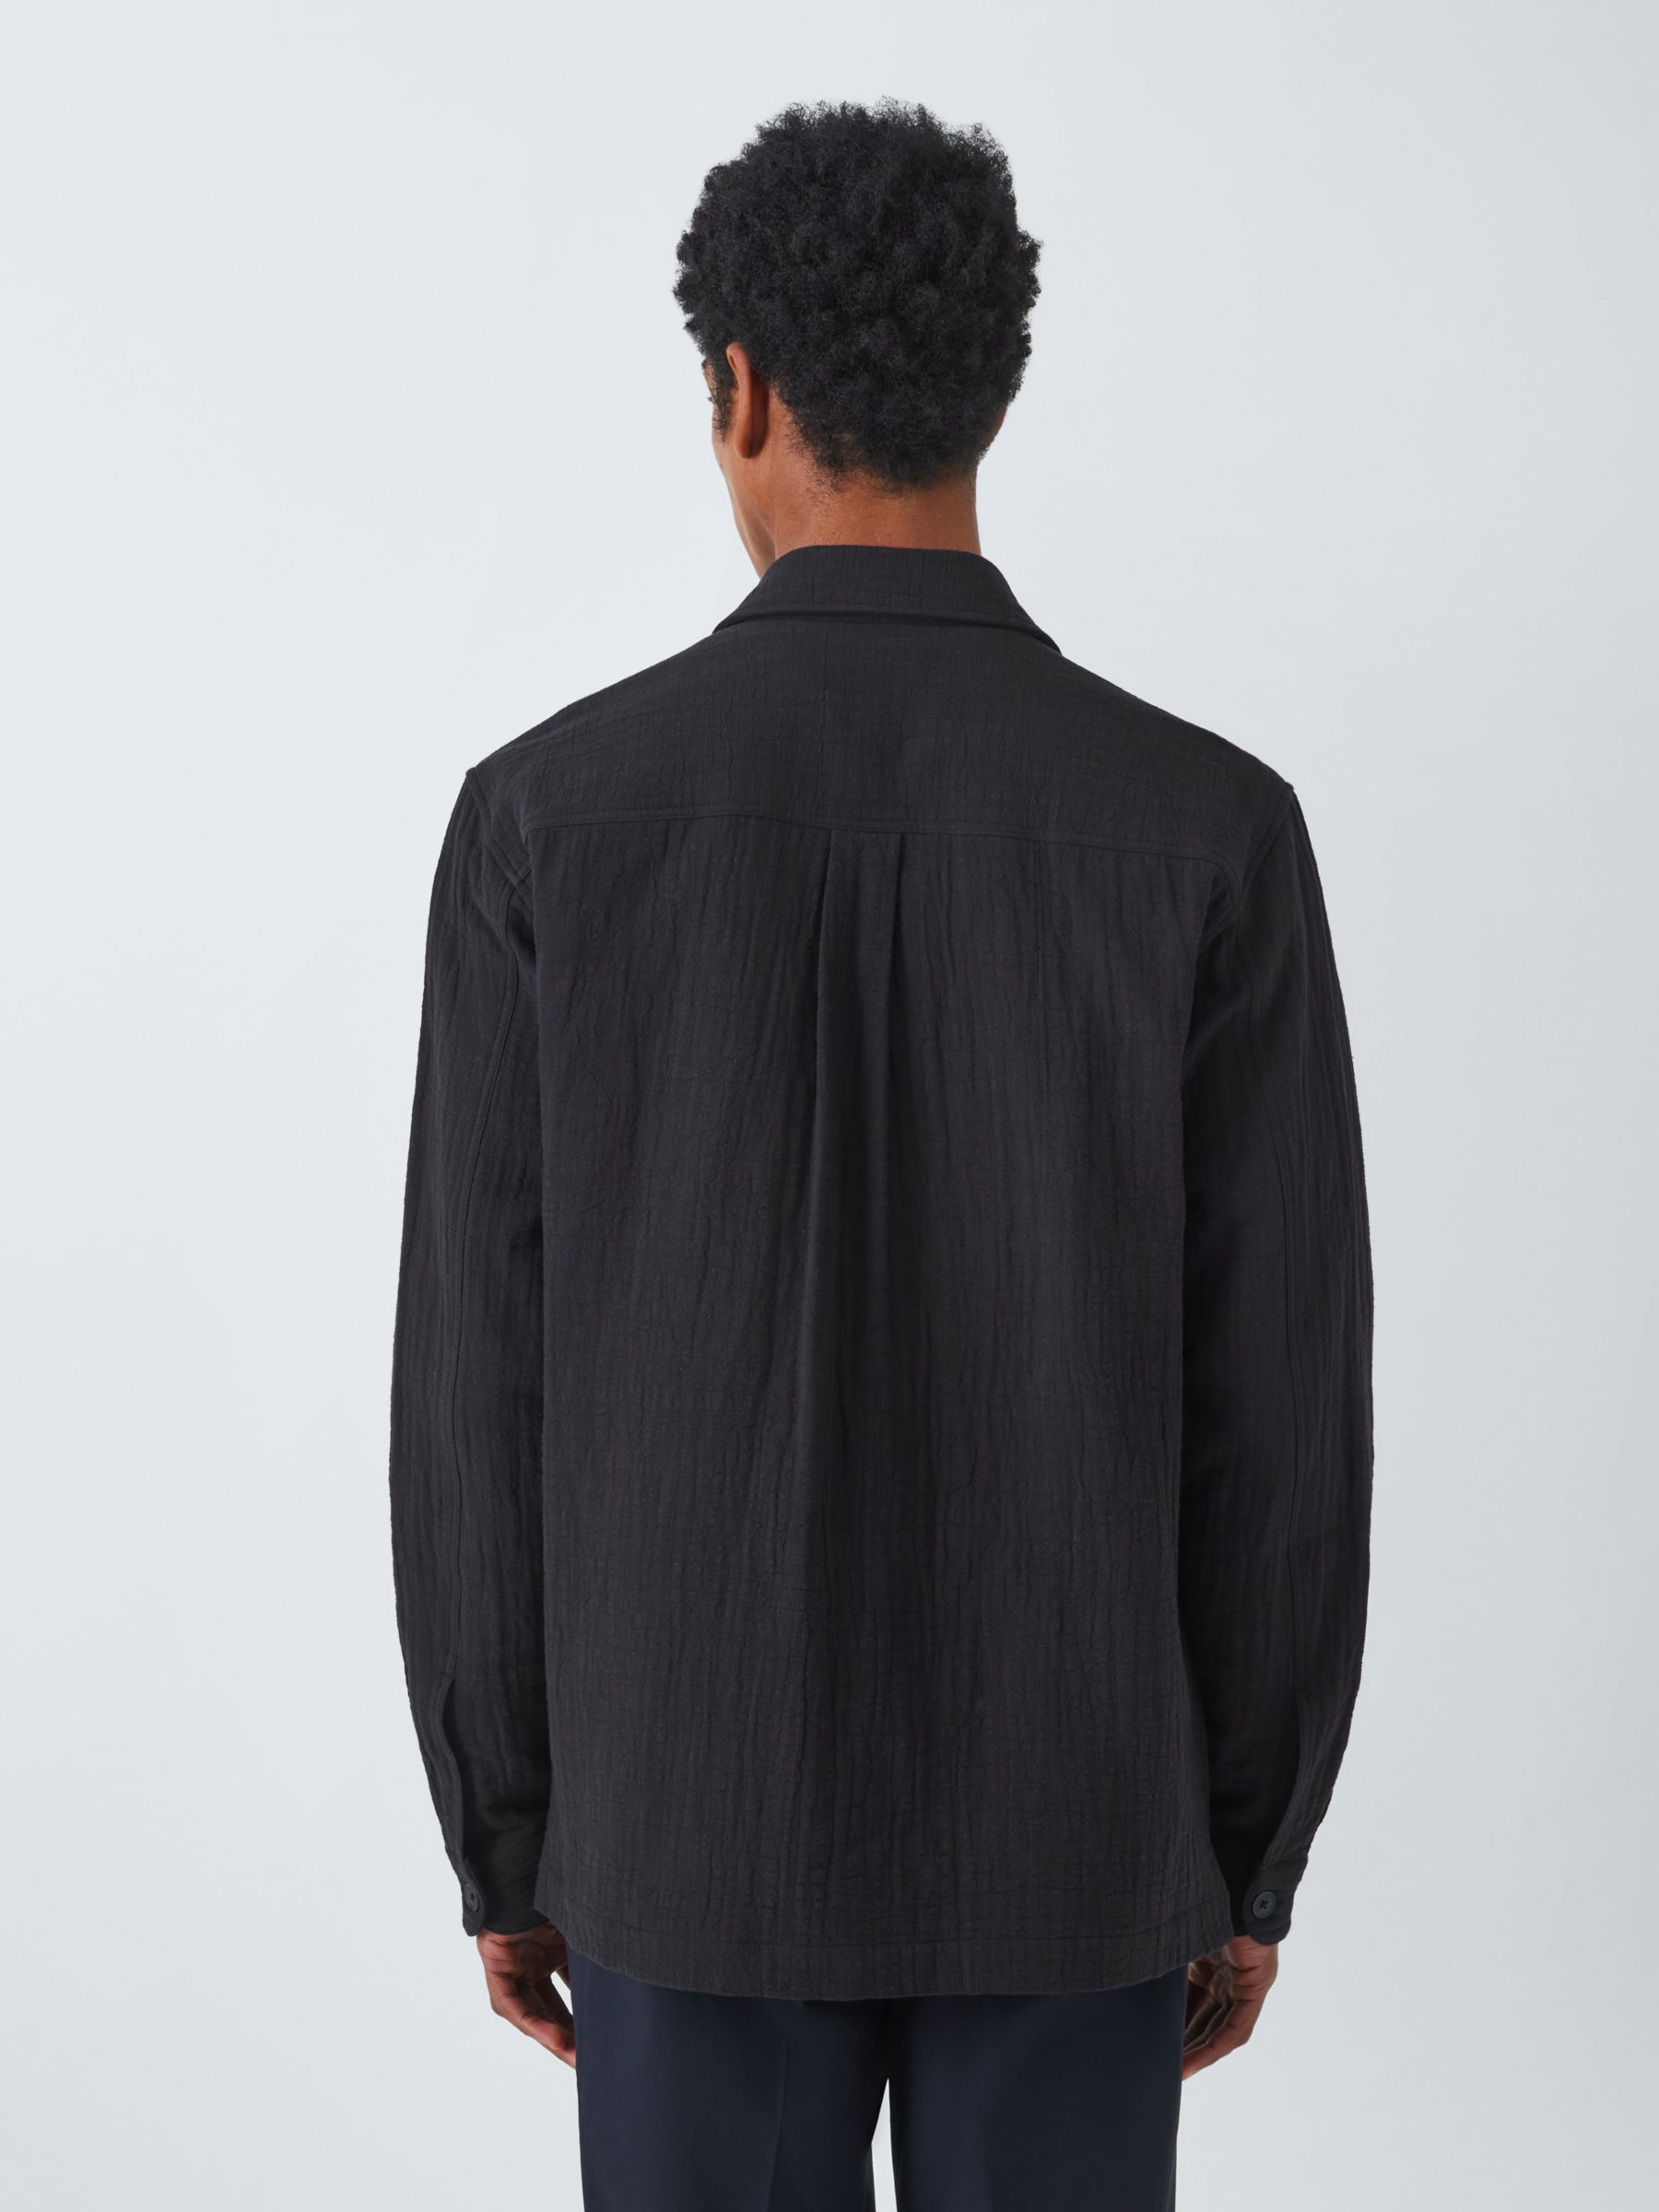 Kin Cotton Long Sleeve Textured Overshirt, Black Beauty, XL